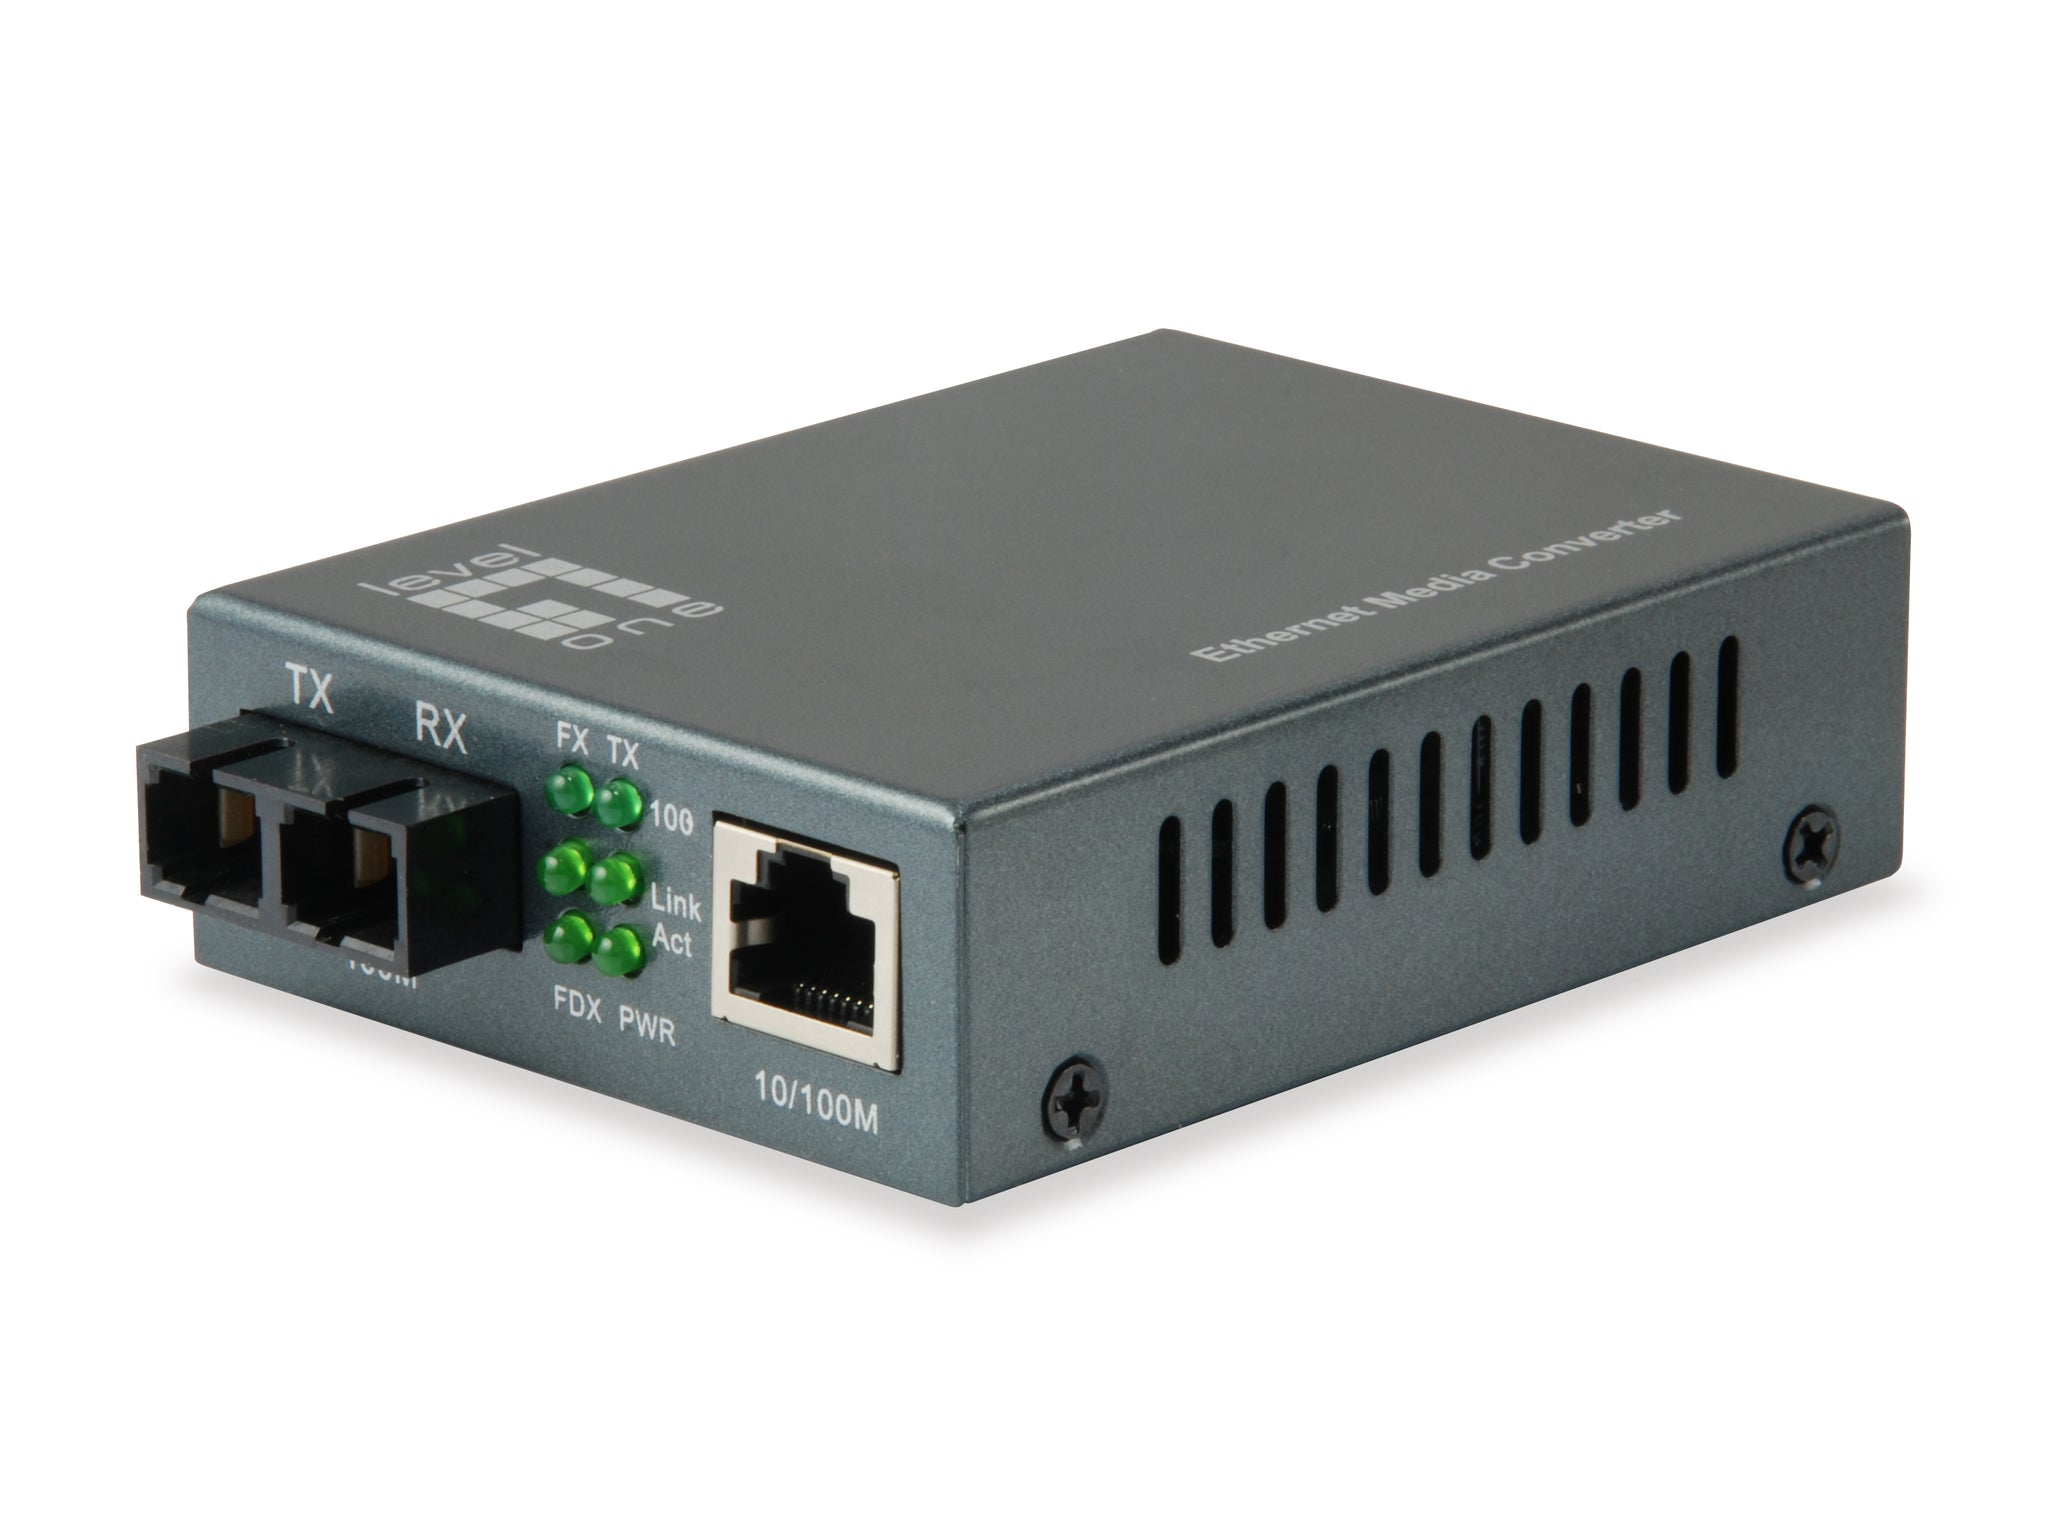 FVT-1104 RJ45 to SC Fast Ethernet Media Converter, Single-Mode Fiber, 1310nm, 60km